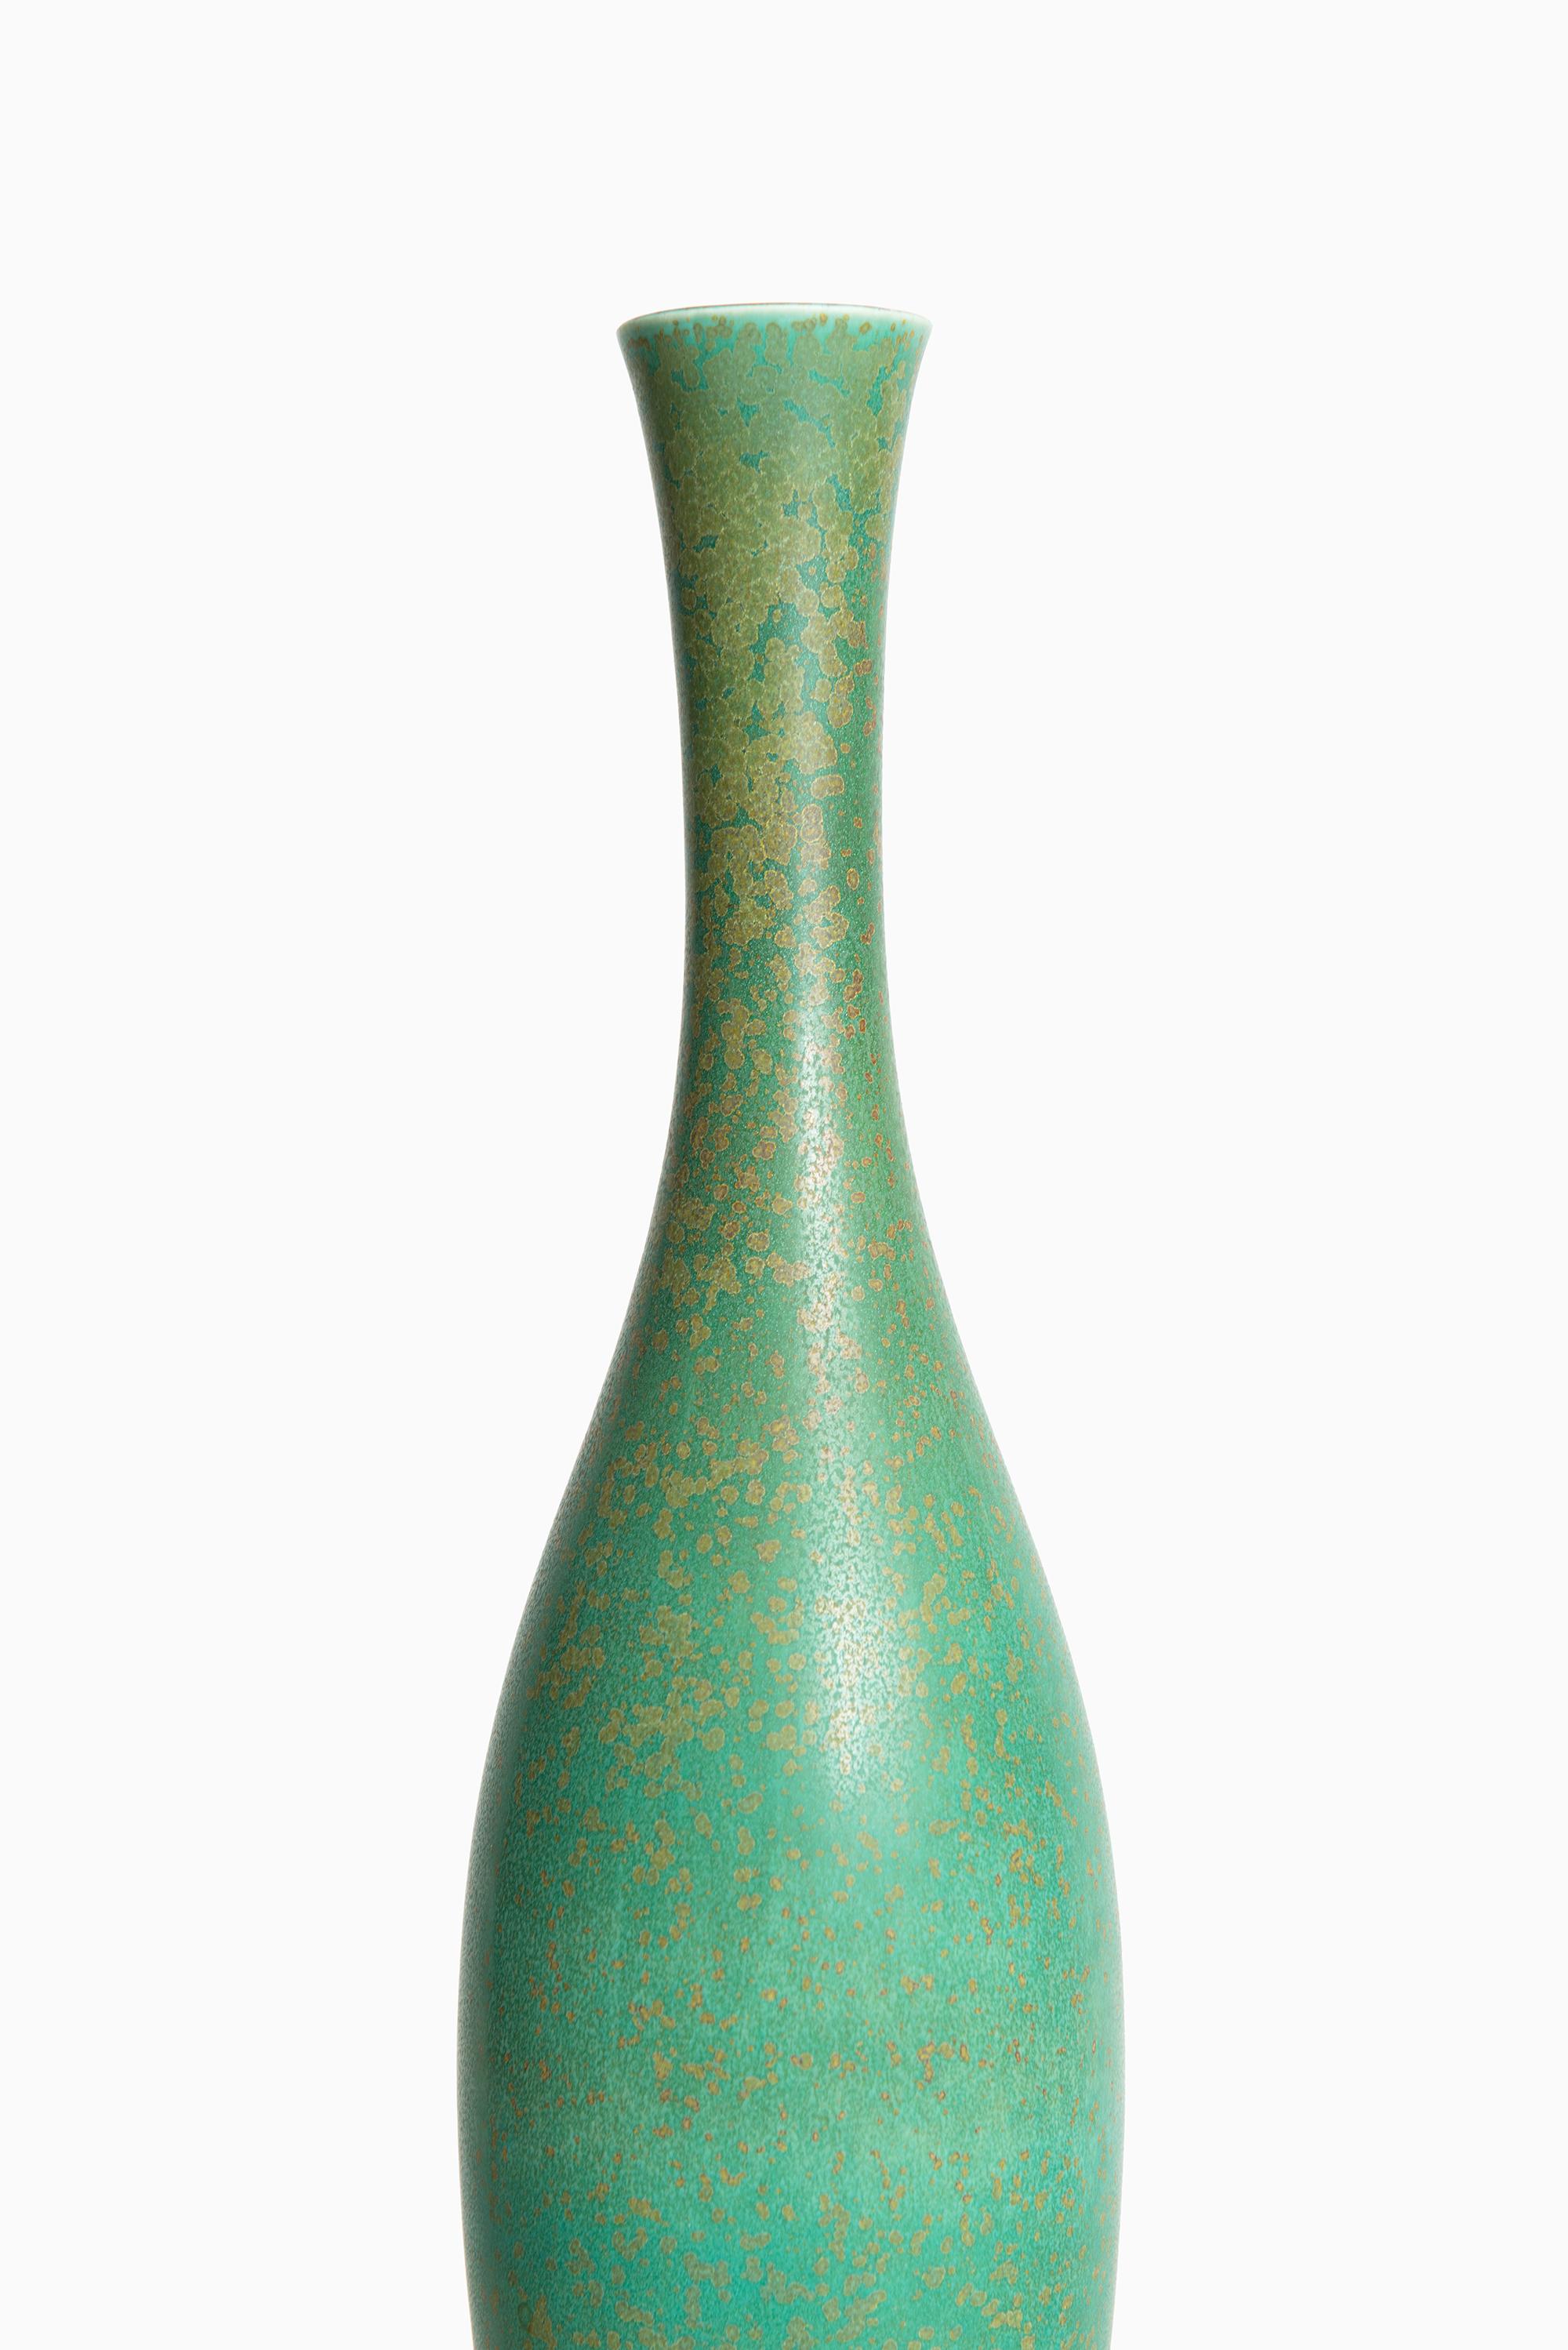 Mid-20th Century Carl-Harry Stålhane Tall Ceramic Vase by Rörstrand in Sweden